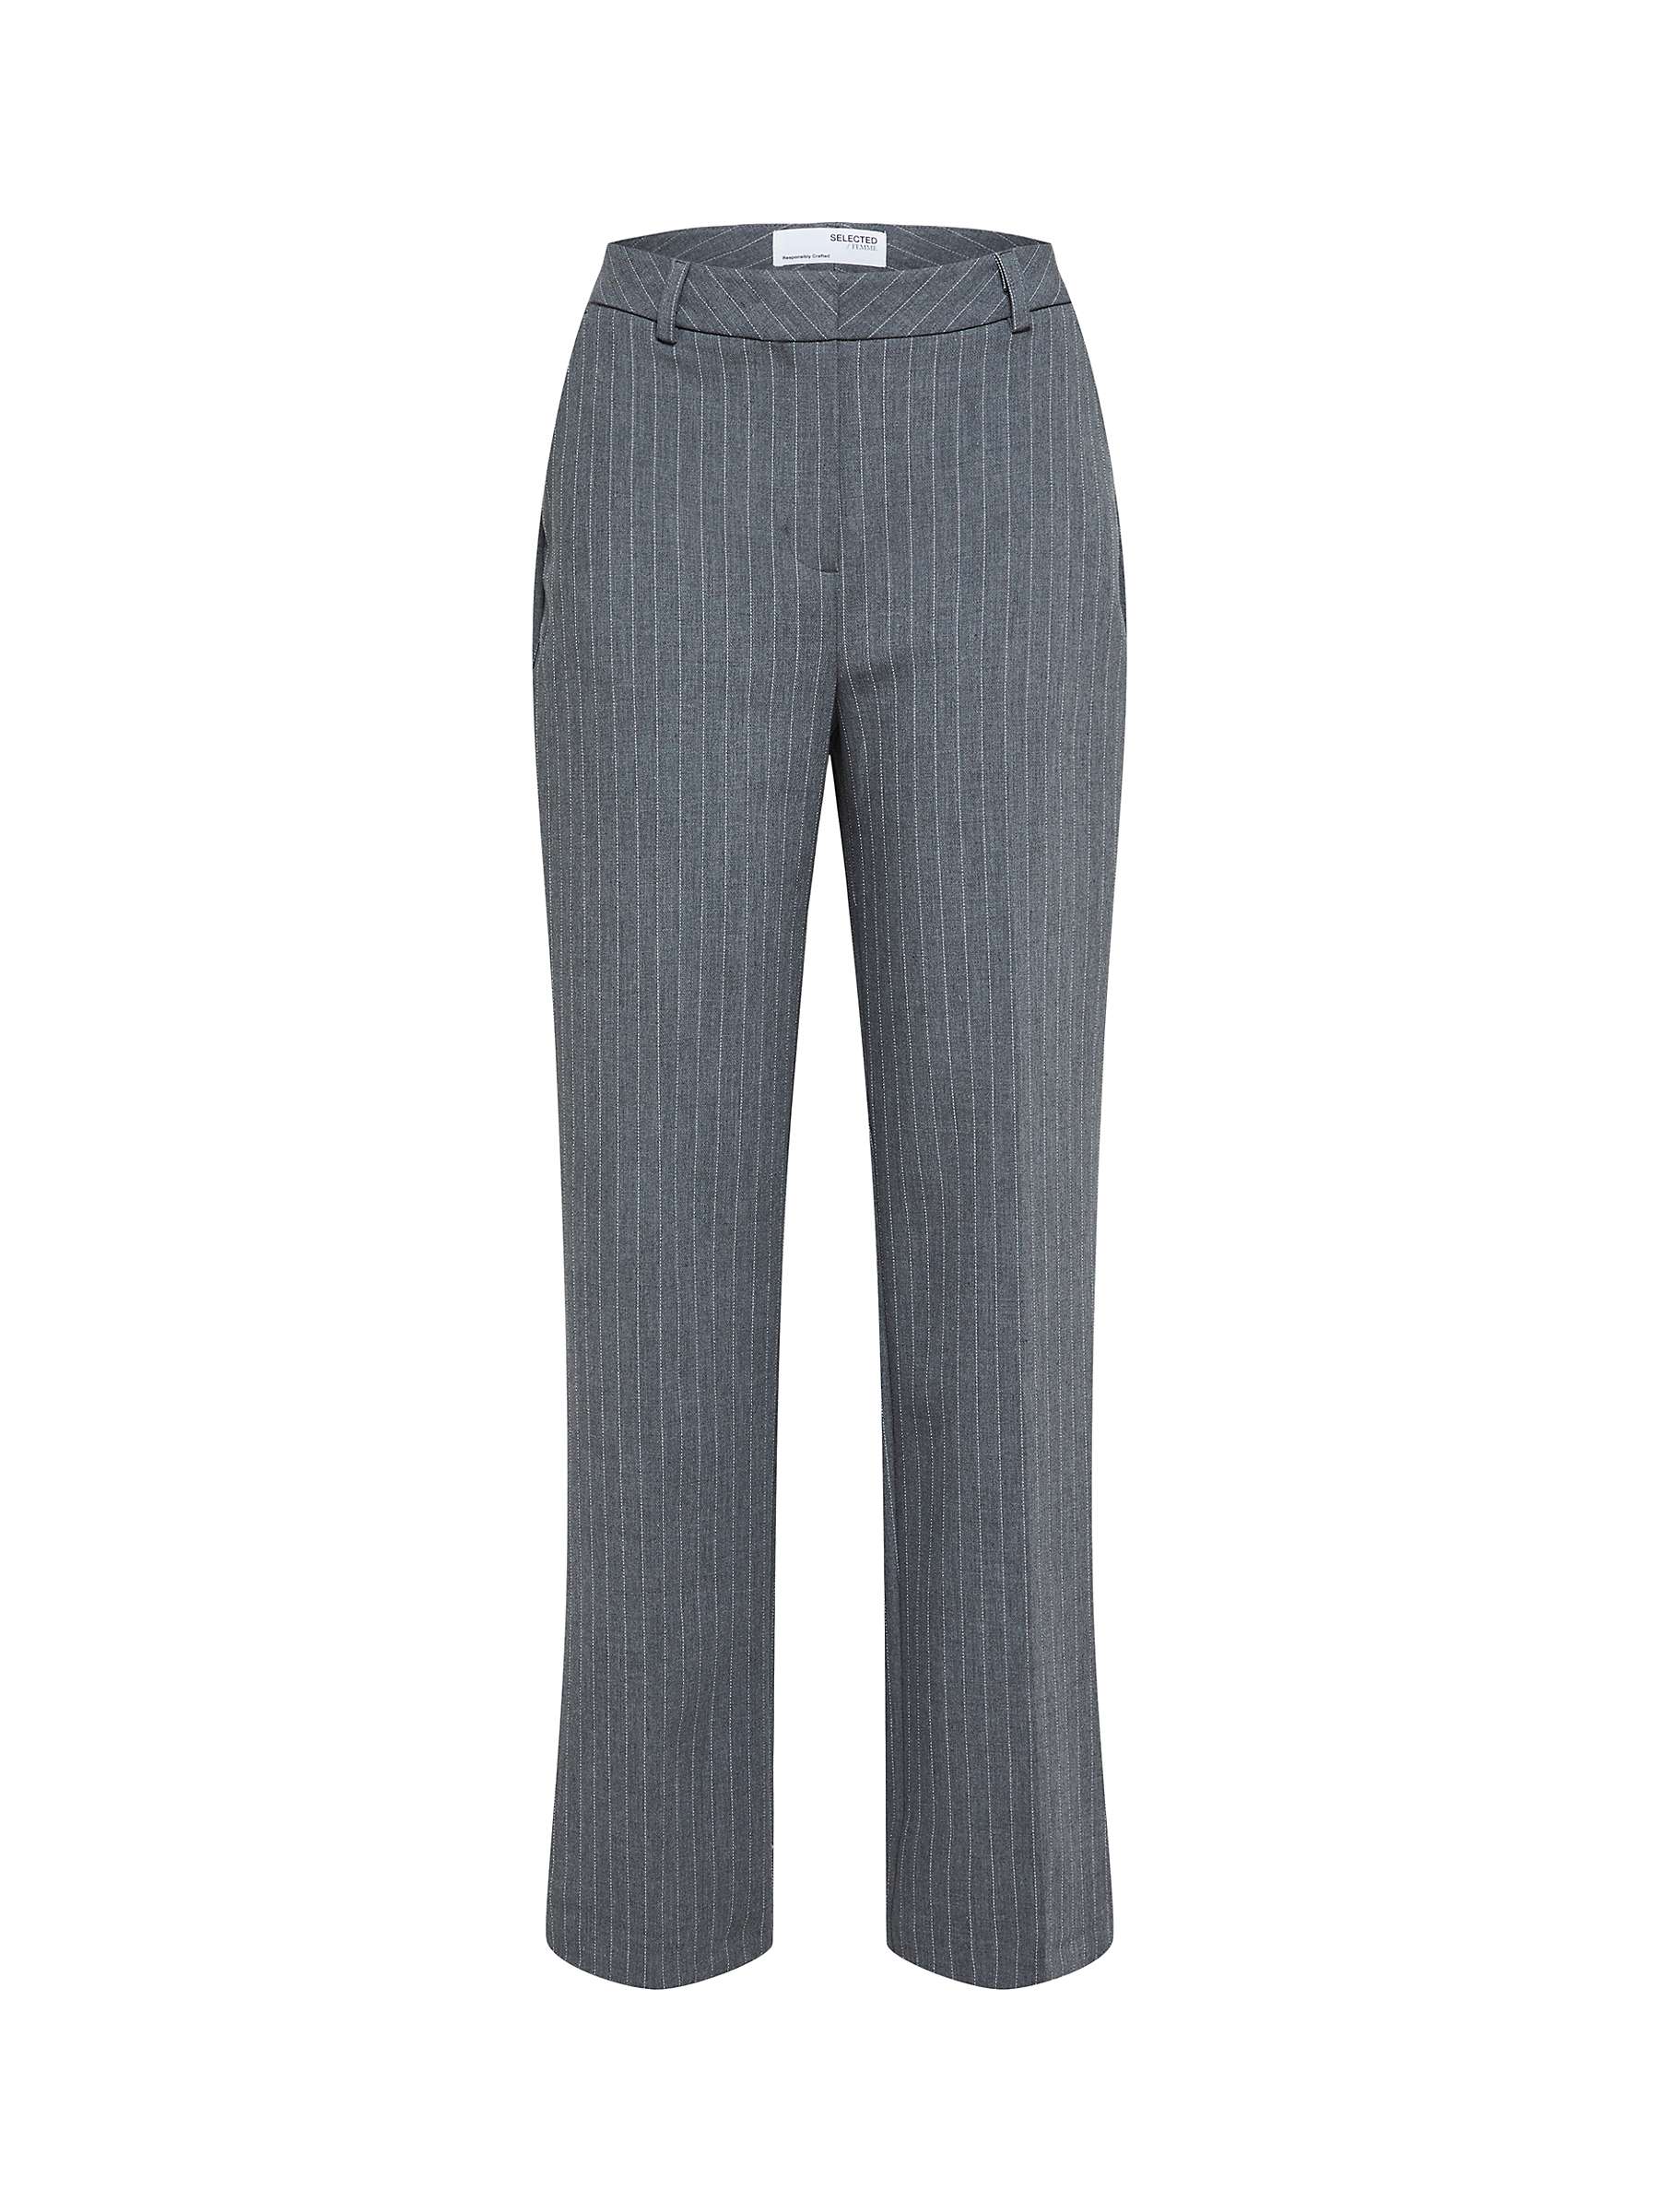 Buy SELECTED FEMME Pinstripe Trousers, Grey Melange Online at johnlewis.com